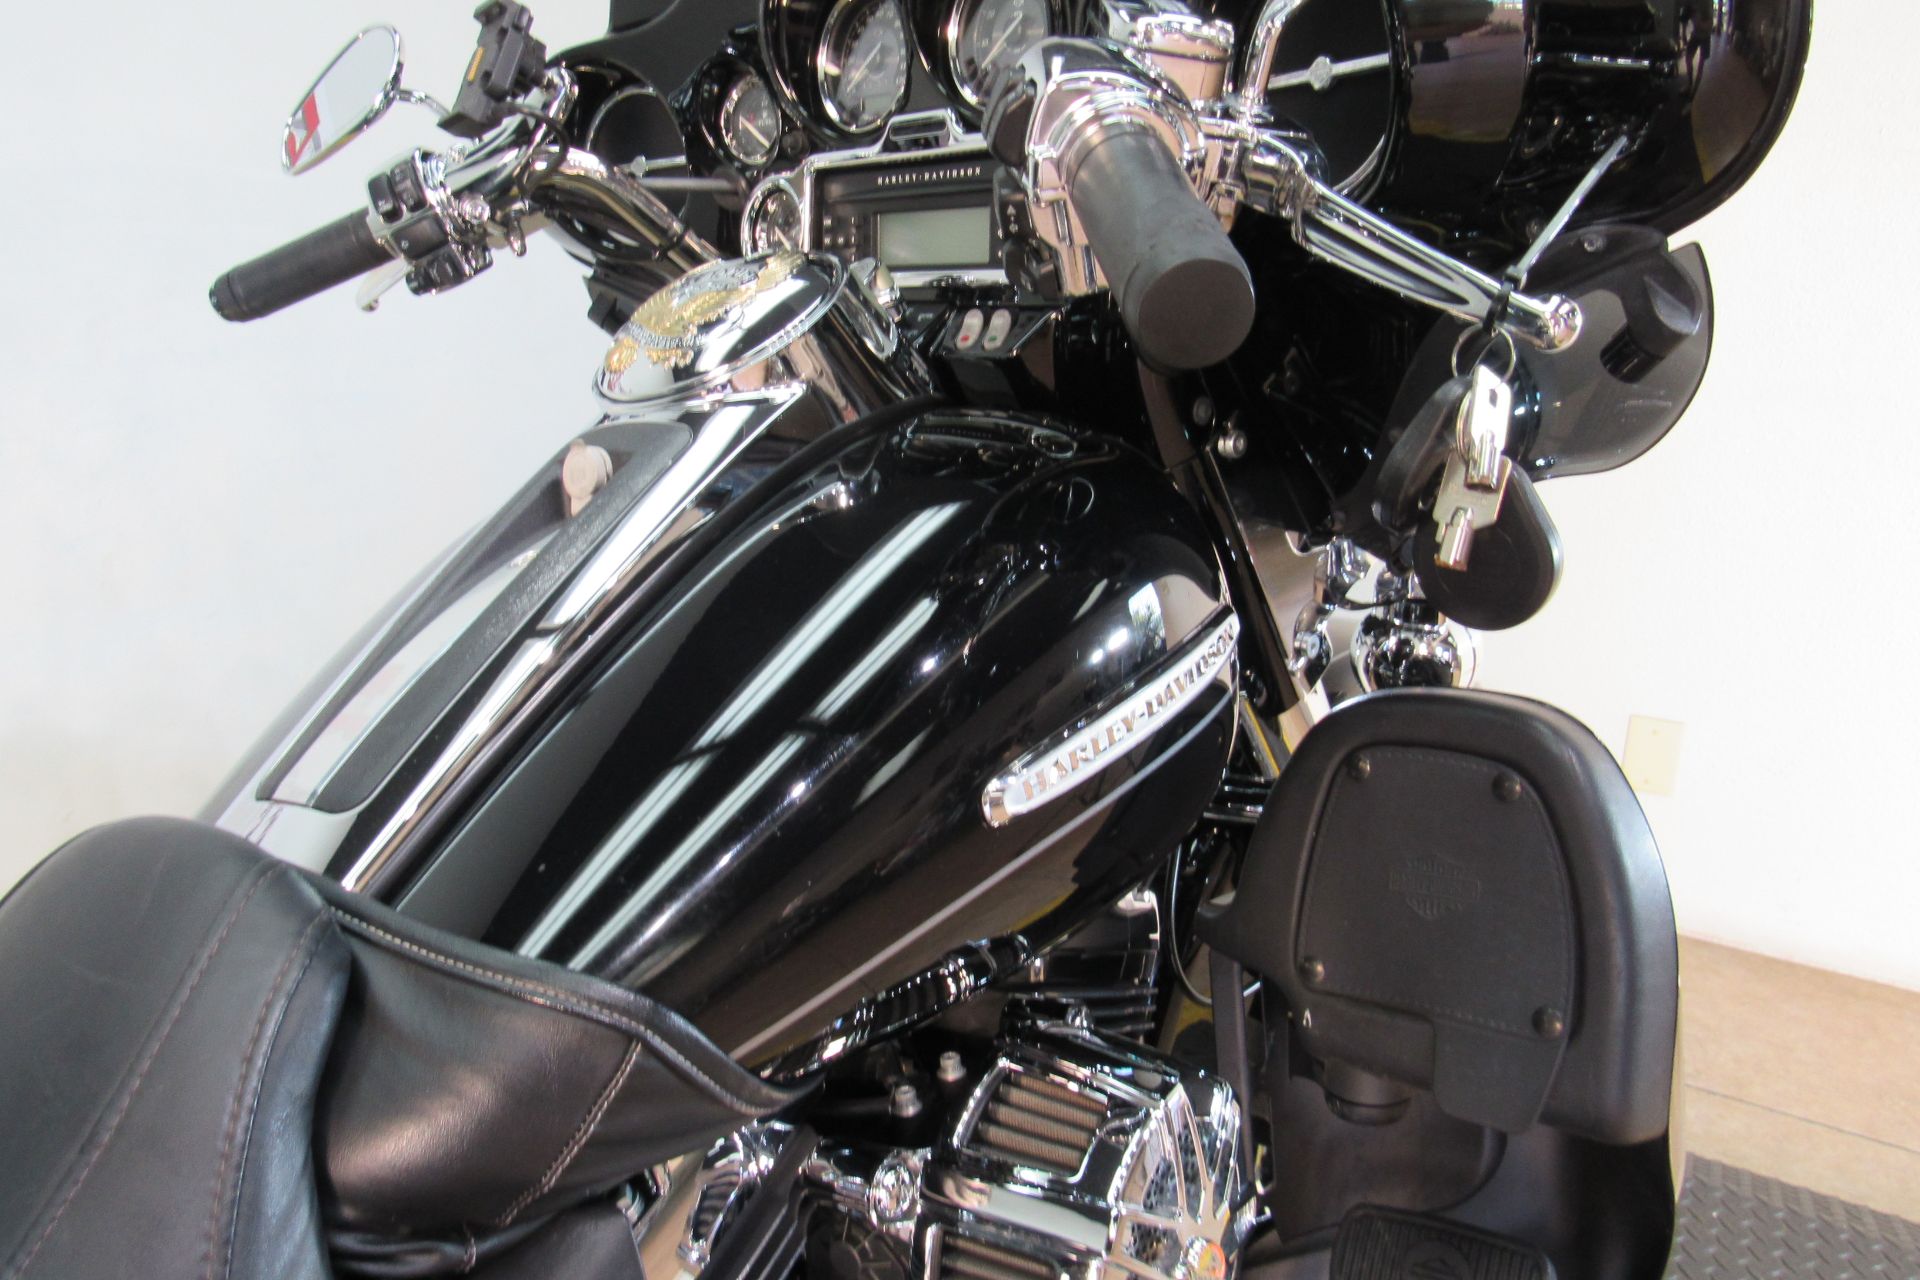 2011 Harley-Davidson Electra Glide® Ultra Limited in Temecula, California - Photo 25